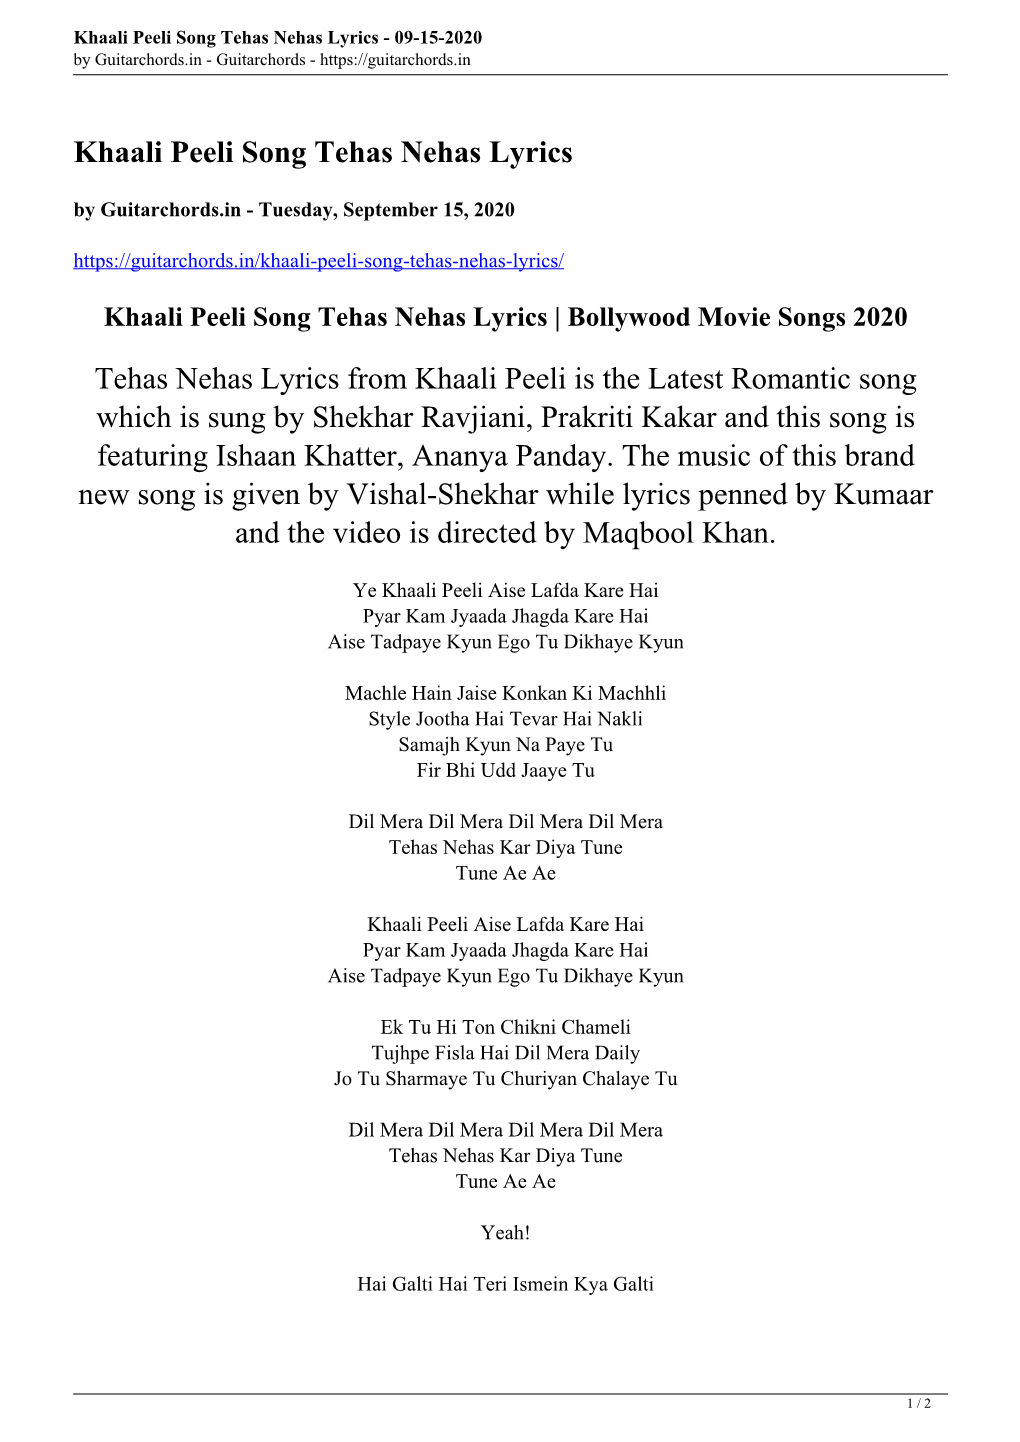 Khaali Peeli Song Tehas Nehas Lyrics - 09-15-2020 by Guitarchords.In - Guitarchords